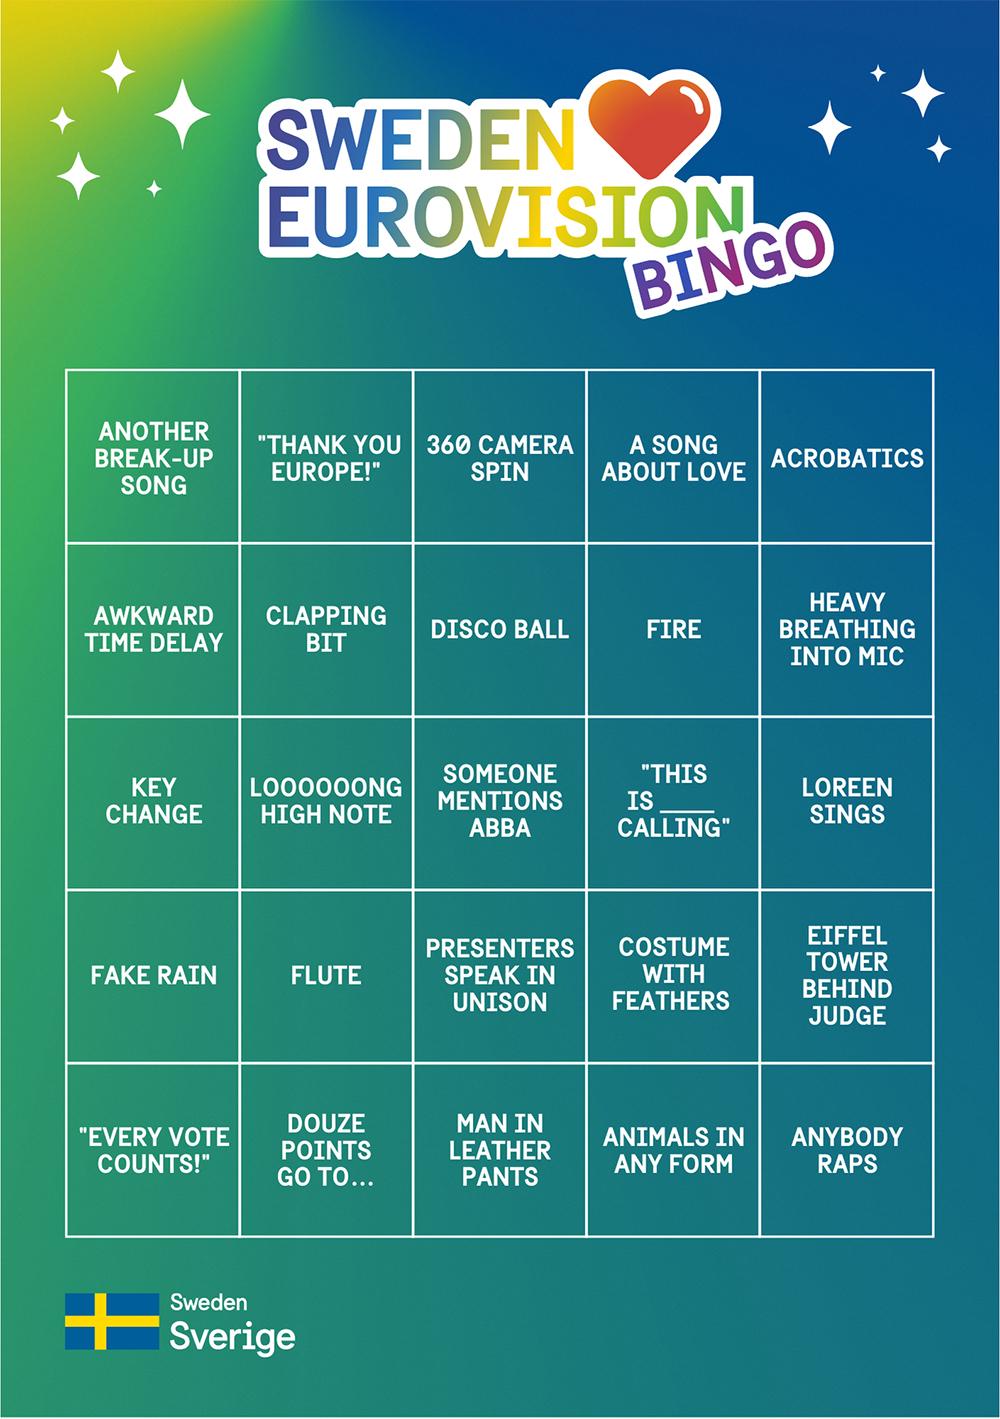 Sweden loves Eurovision bingo